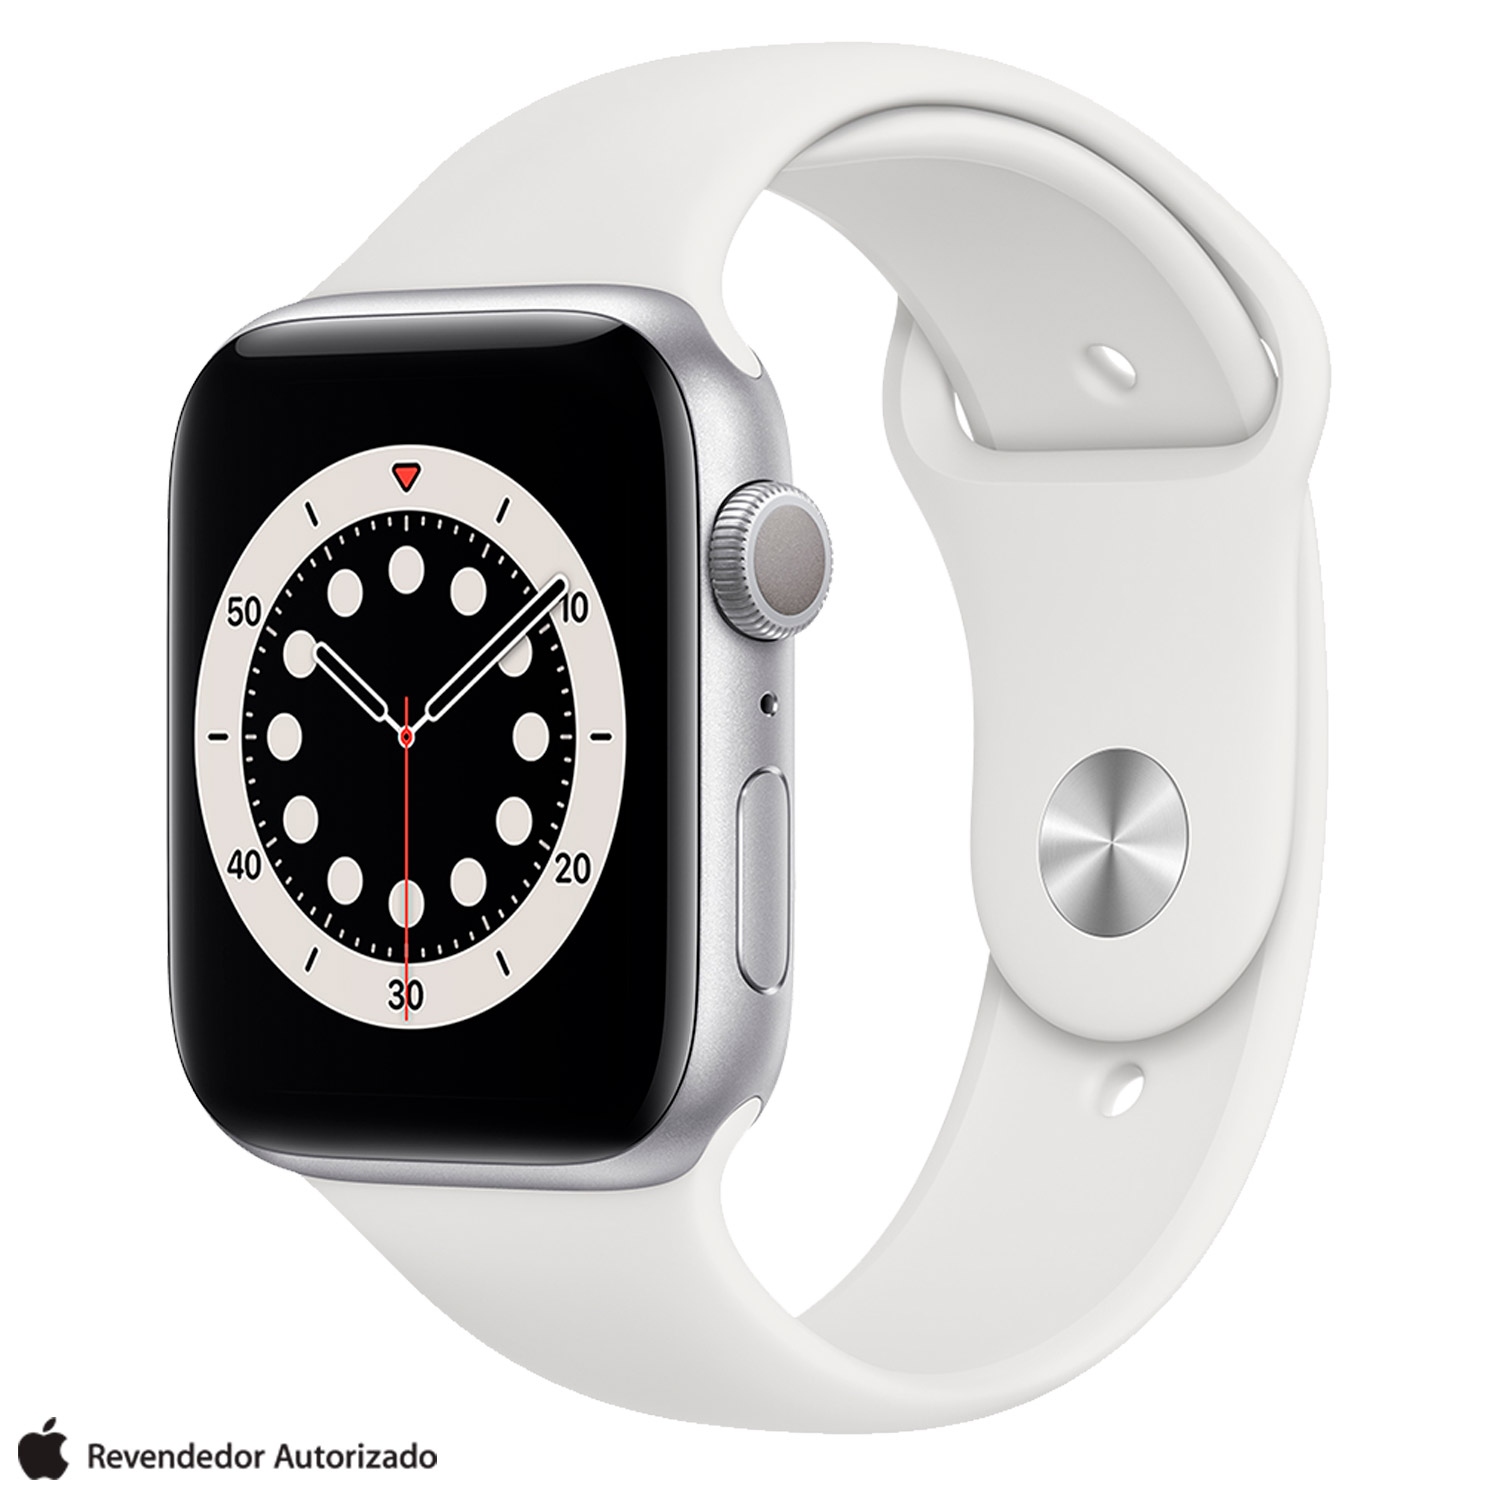 Imagem: Smartwatch Apple Watch Series 6